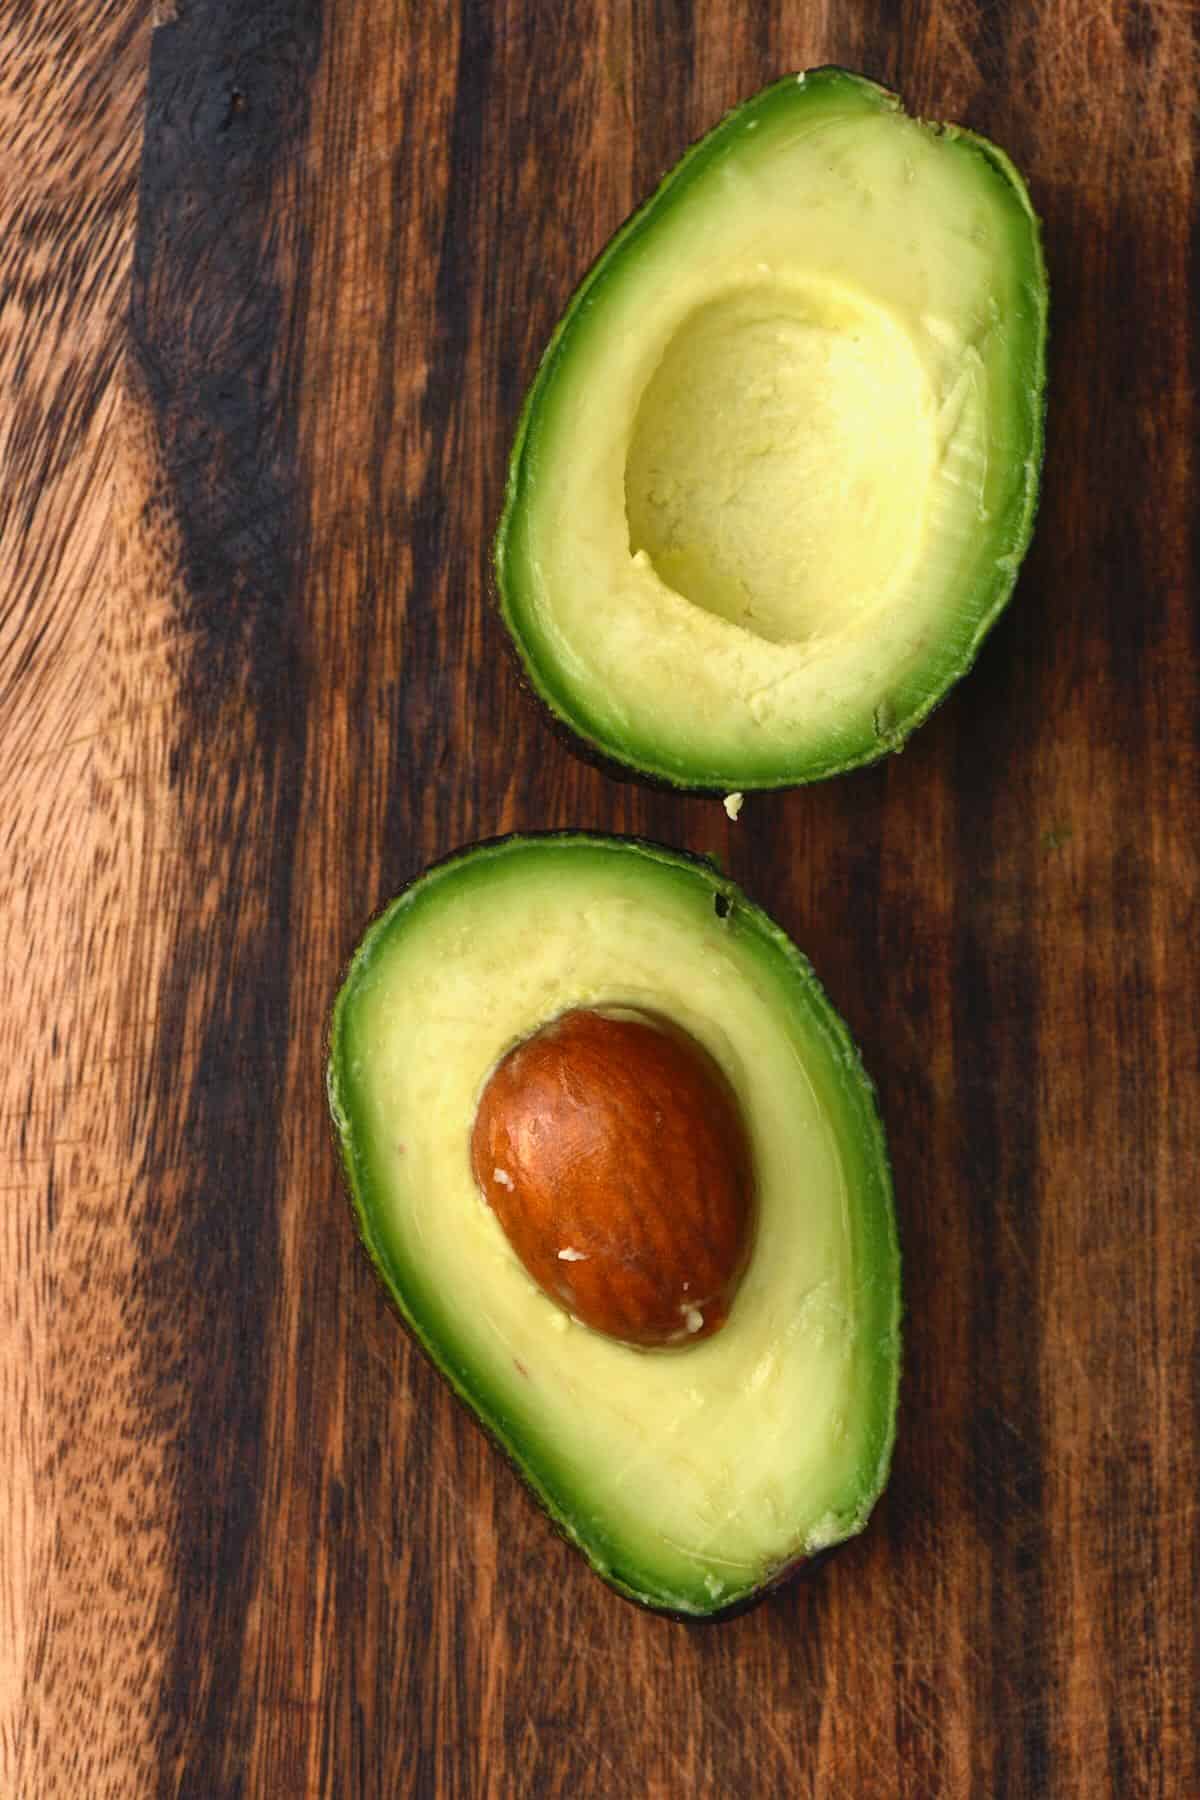 An avocado cut in two halves